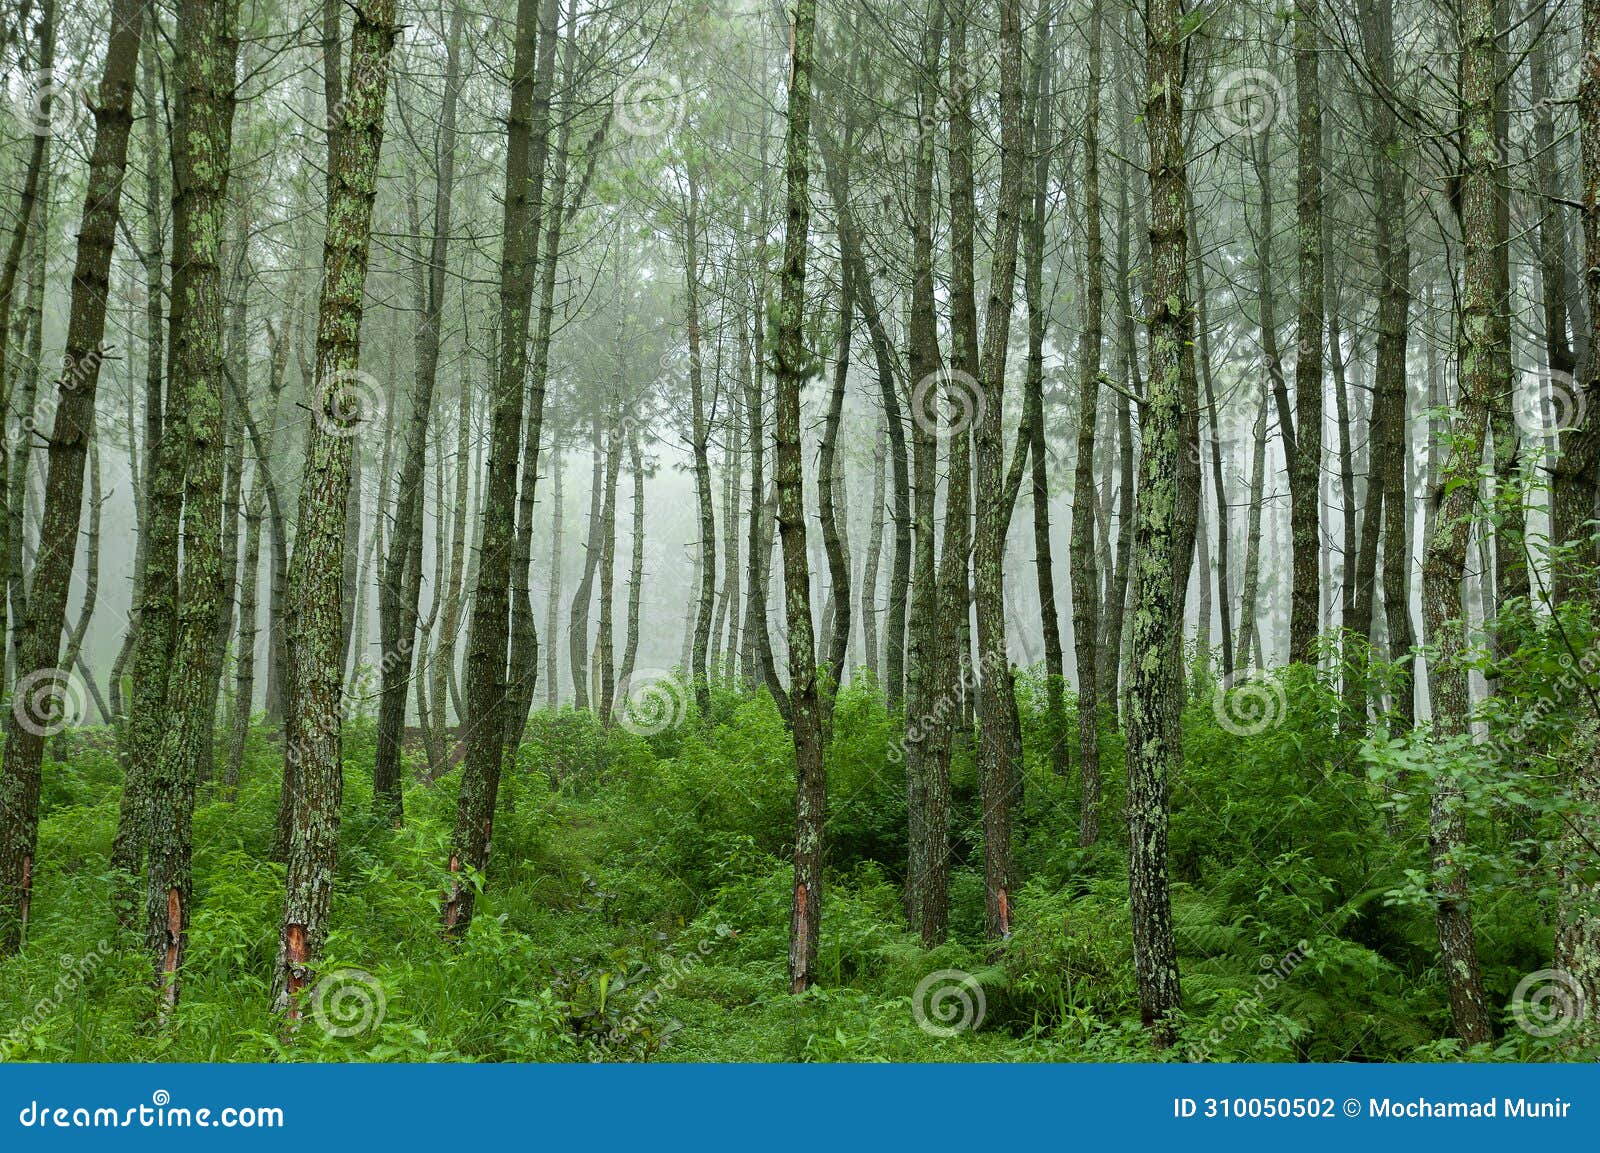 coban talun pine forest, malang, indonesia